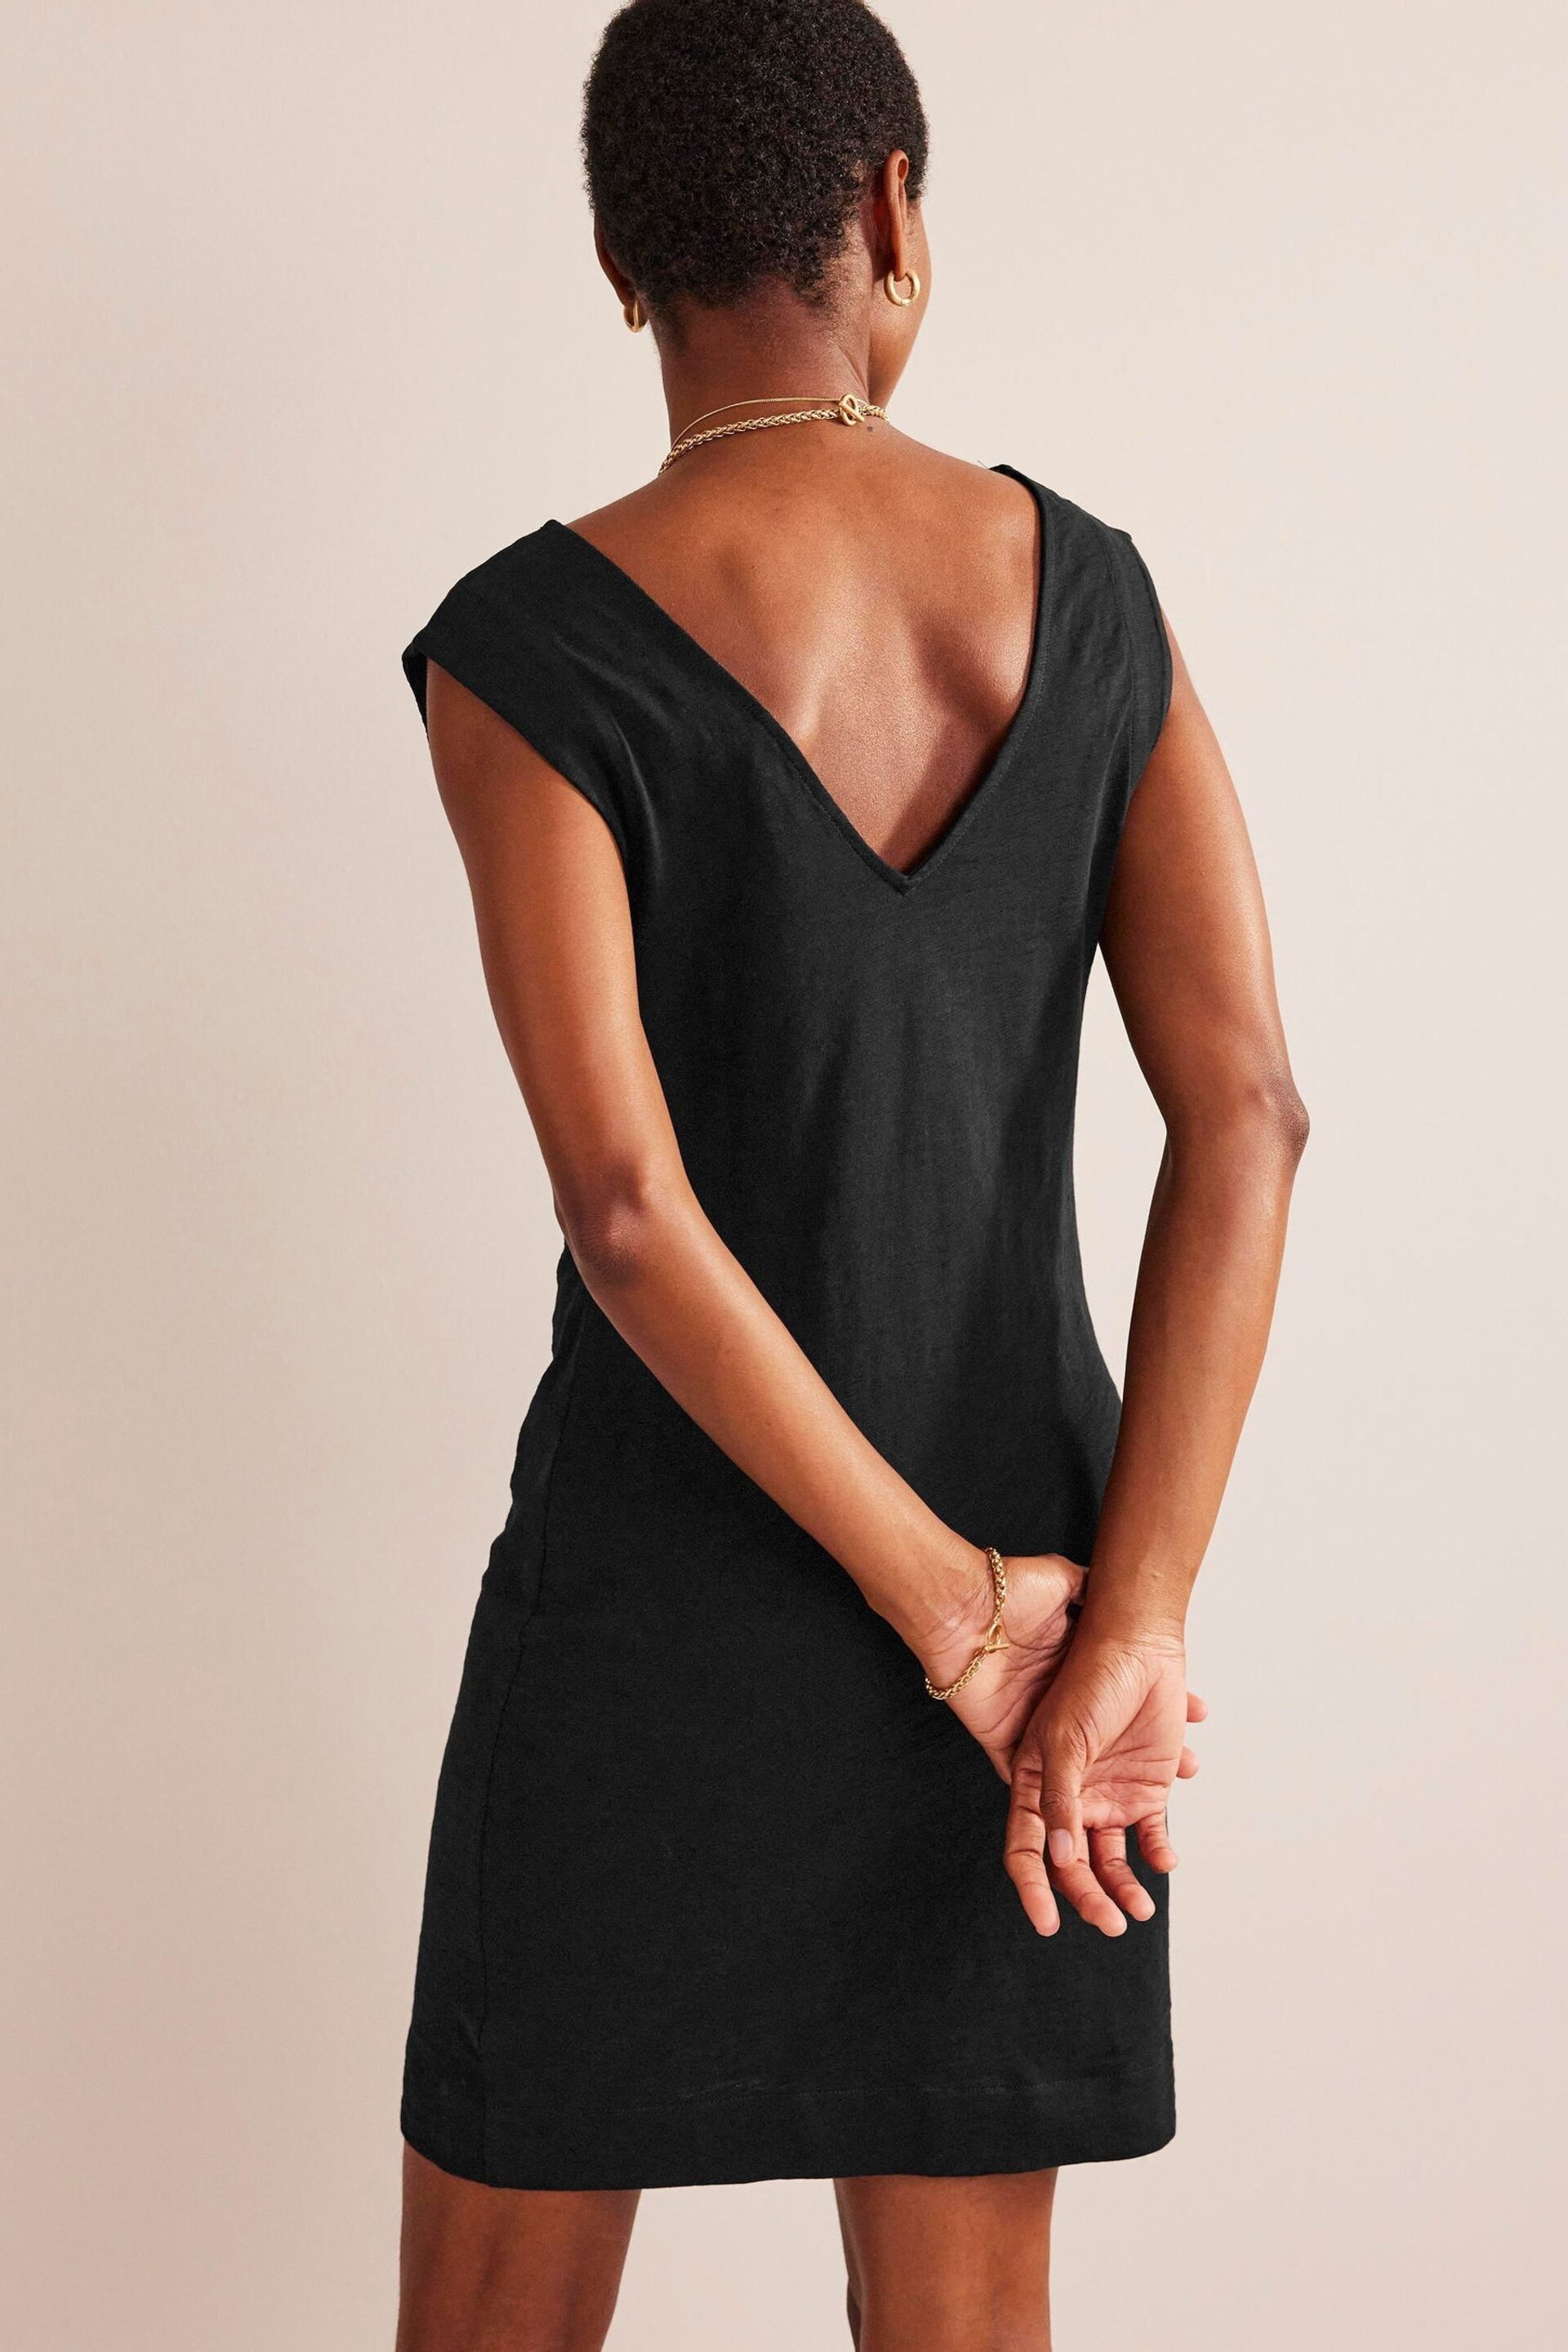 Boden Black Sleeveless Jersey Shift Dress - Image 2 of 5